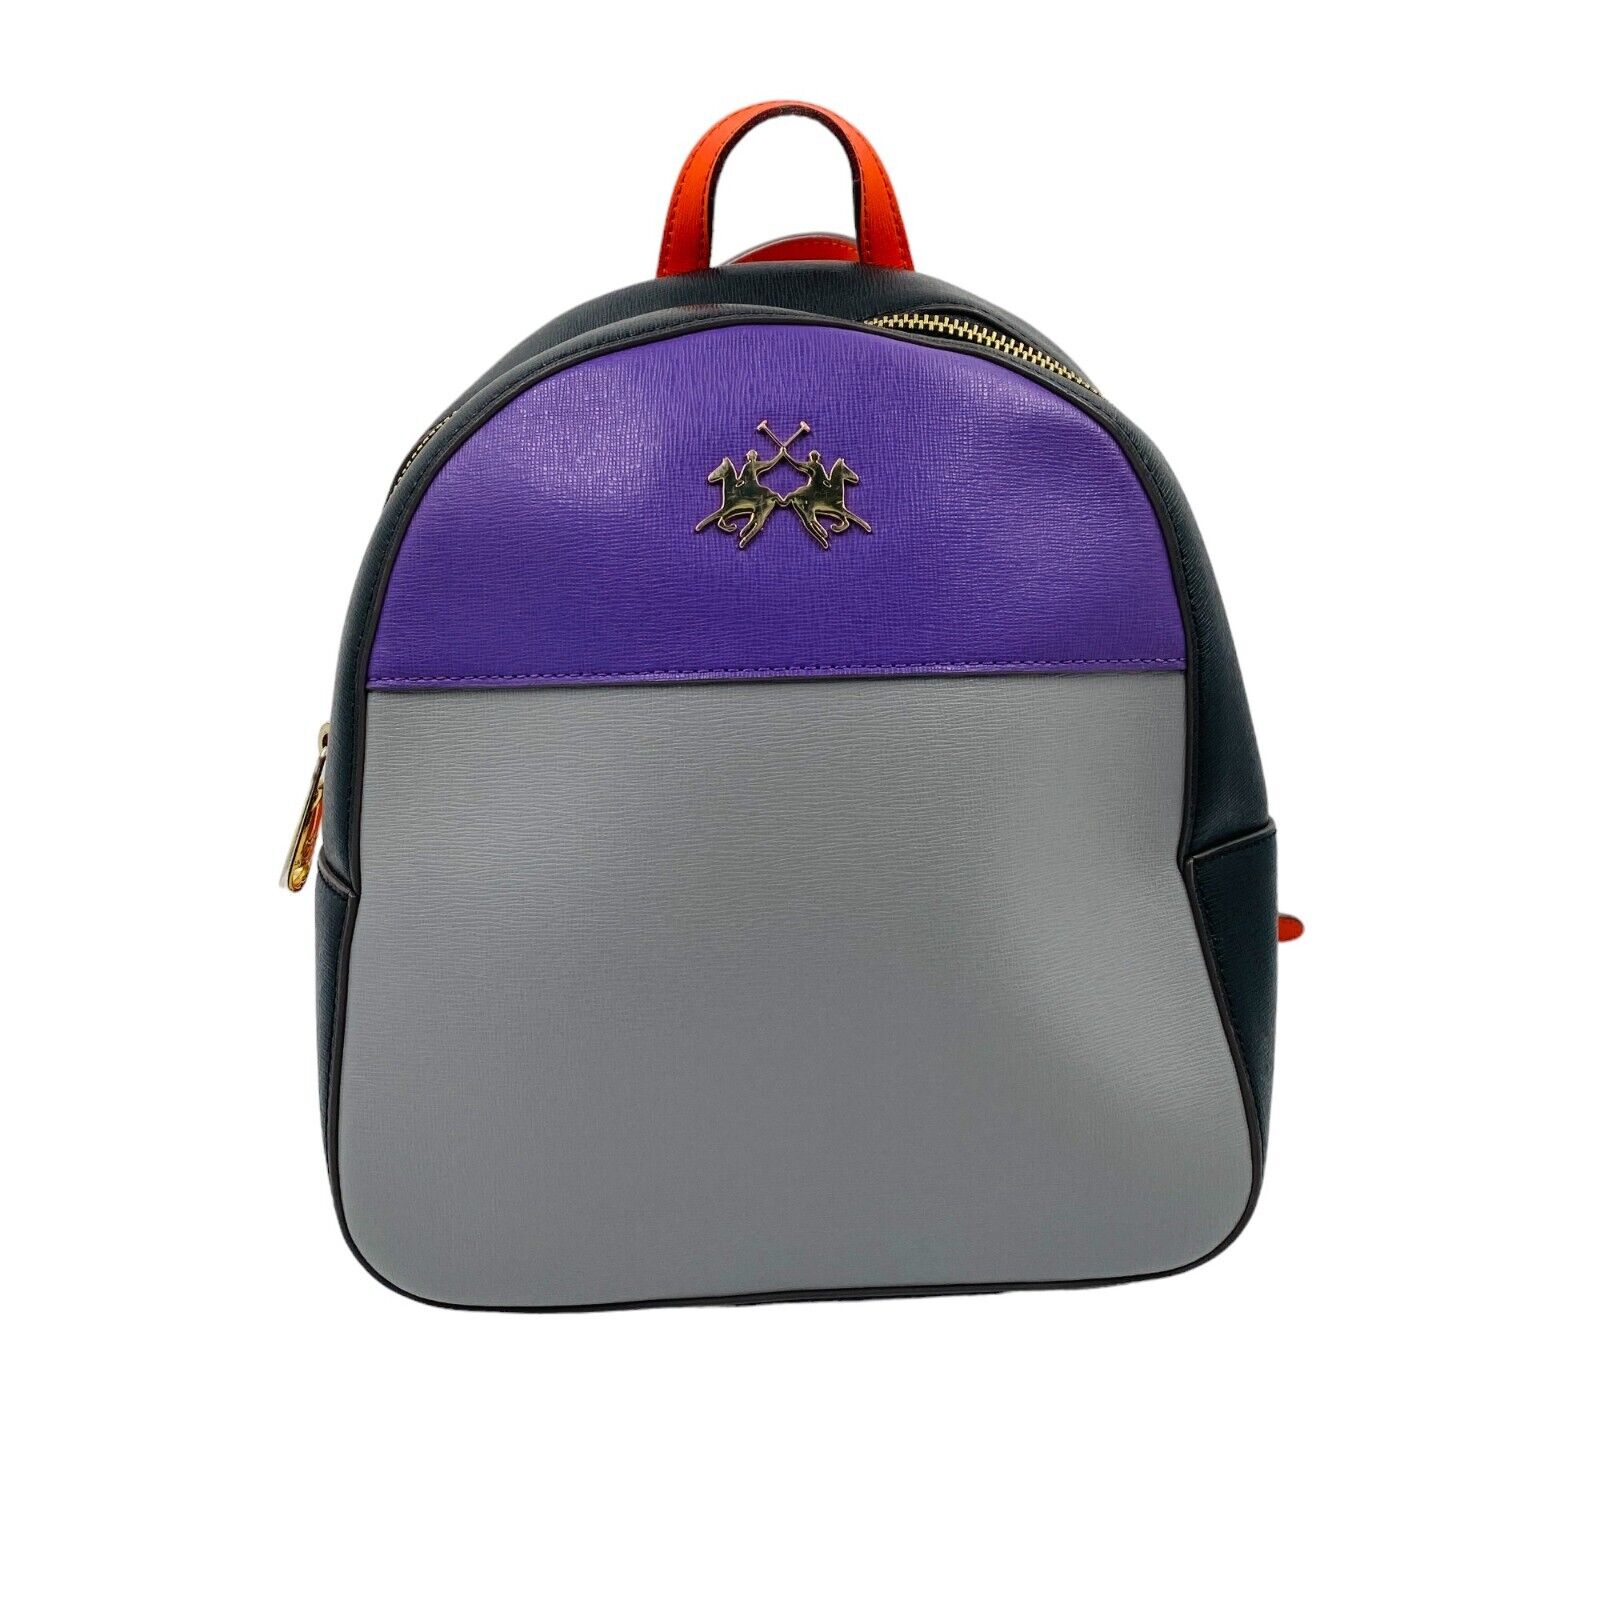 La Martina Grey 100% Leather Medium Size Ladies Backpack Rucksac Bag